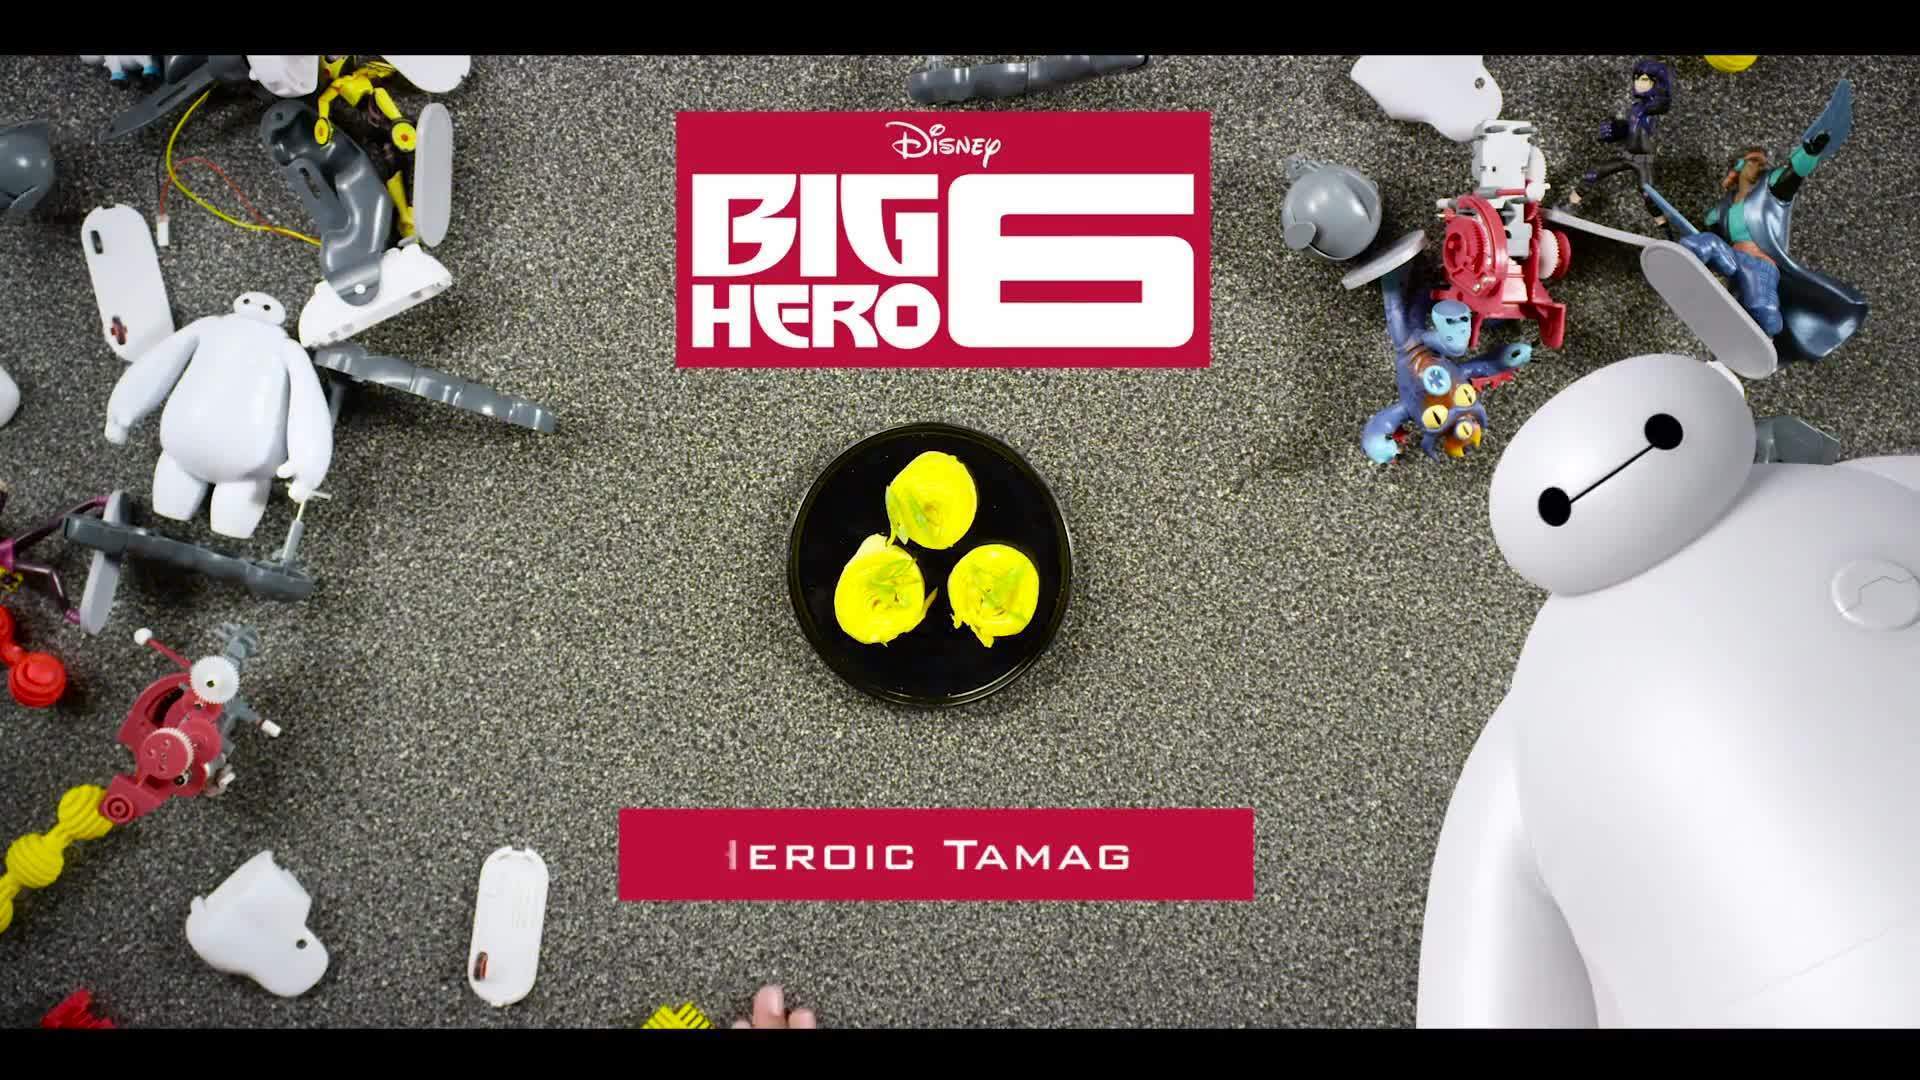 Big Hero Six - Heroic Tamago | Dishes By Disney